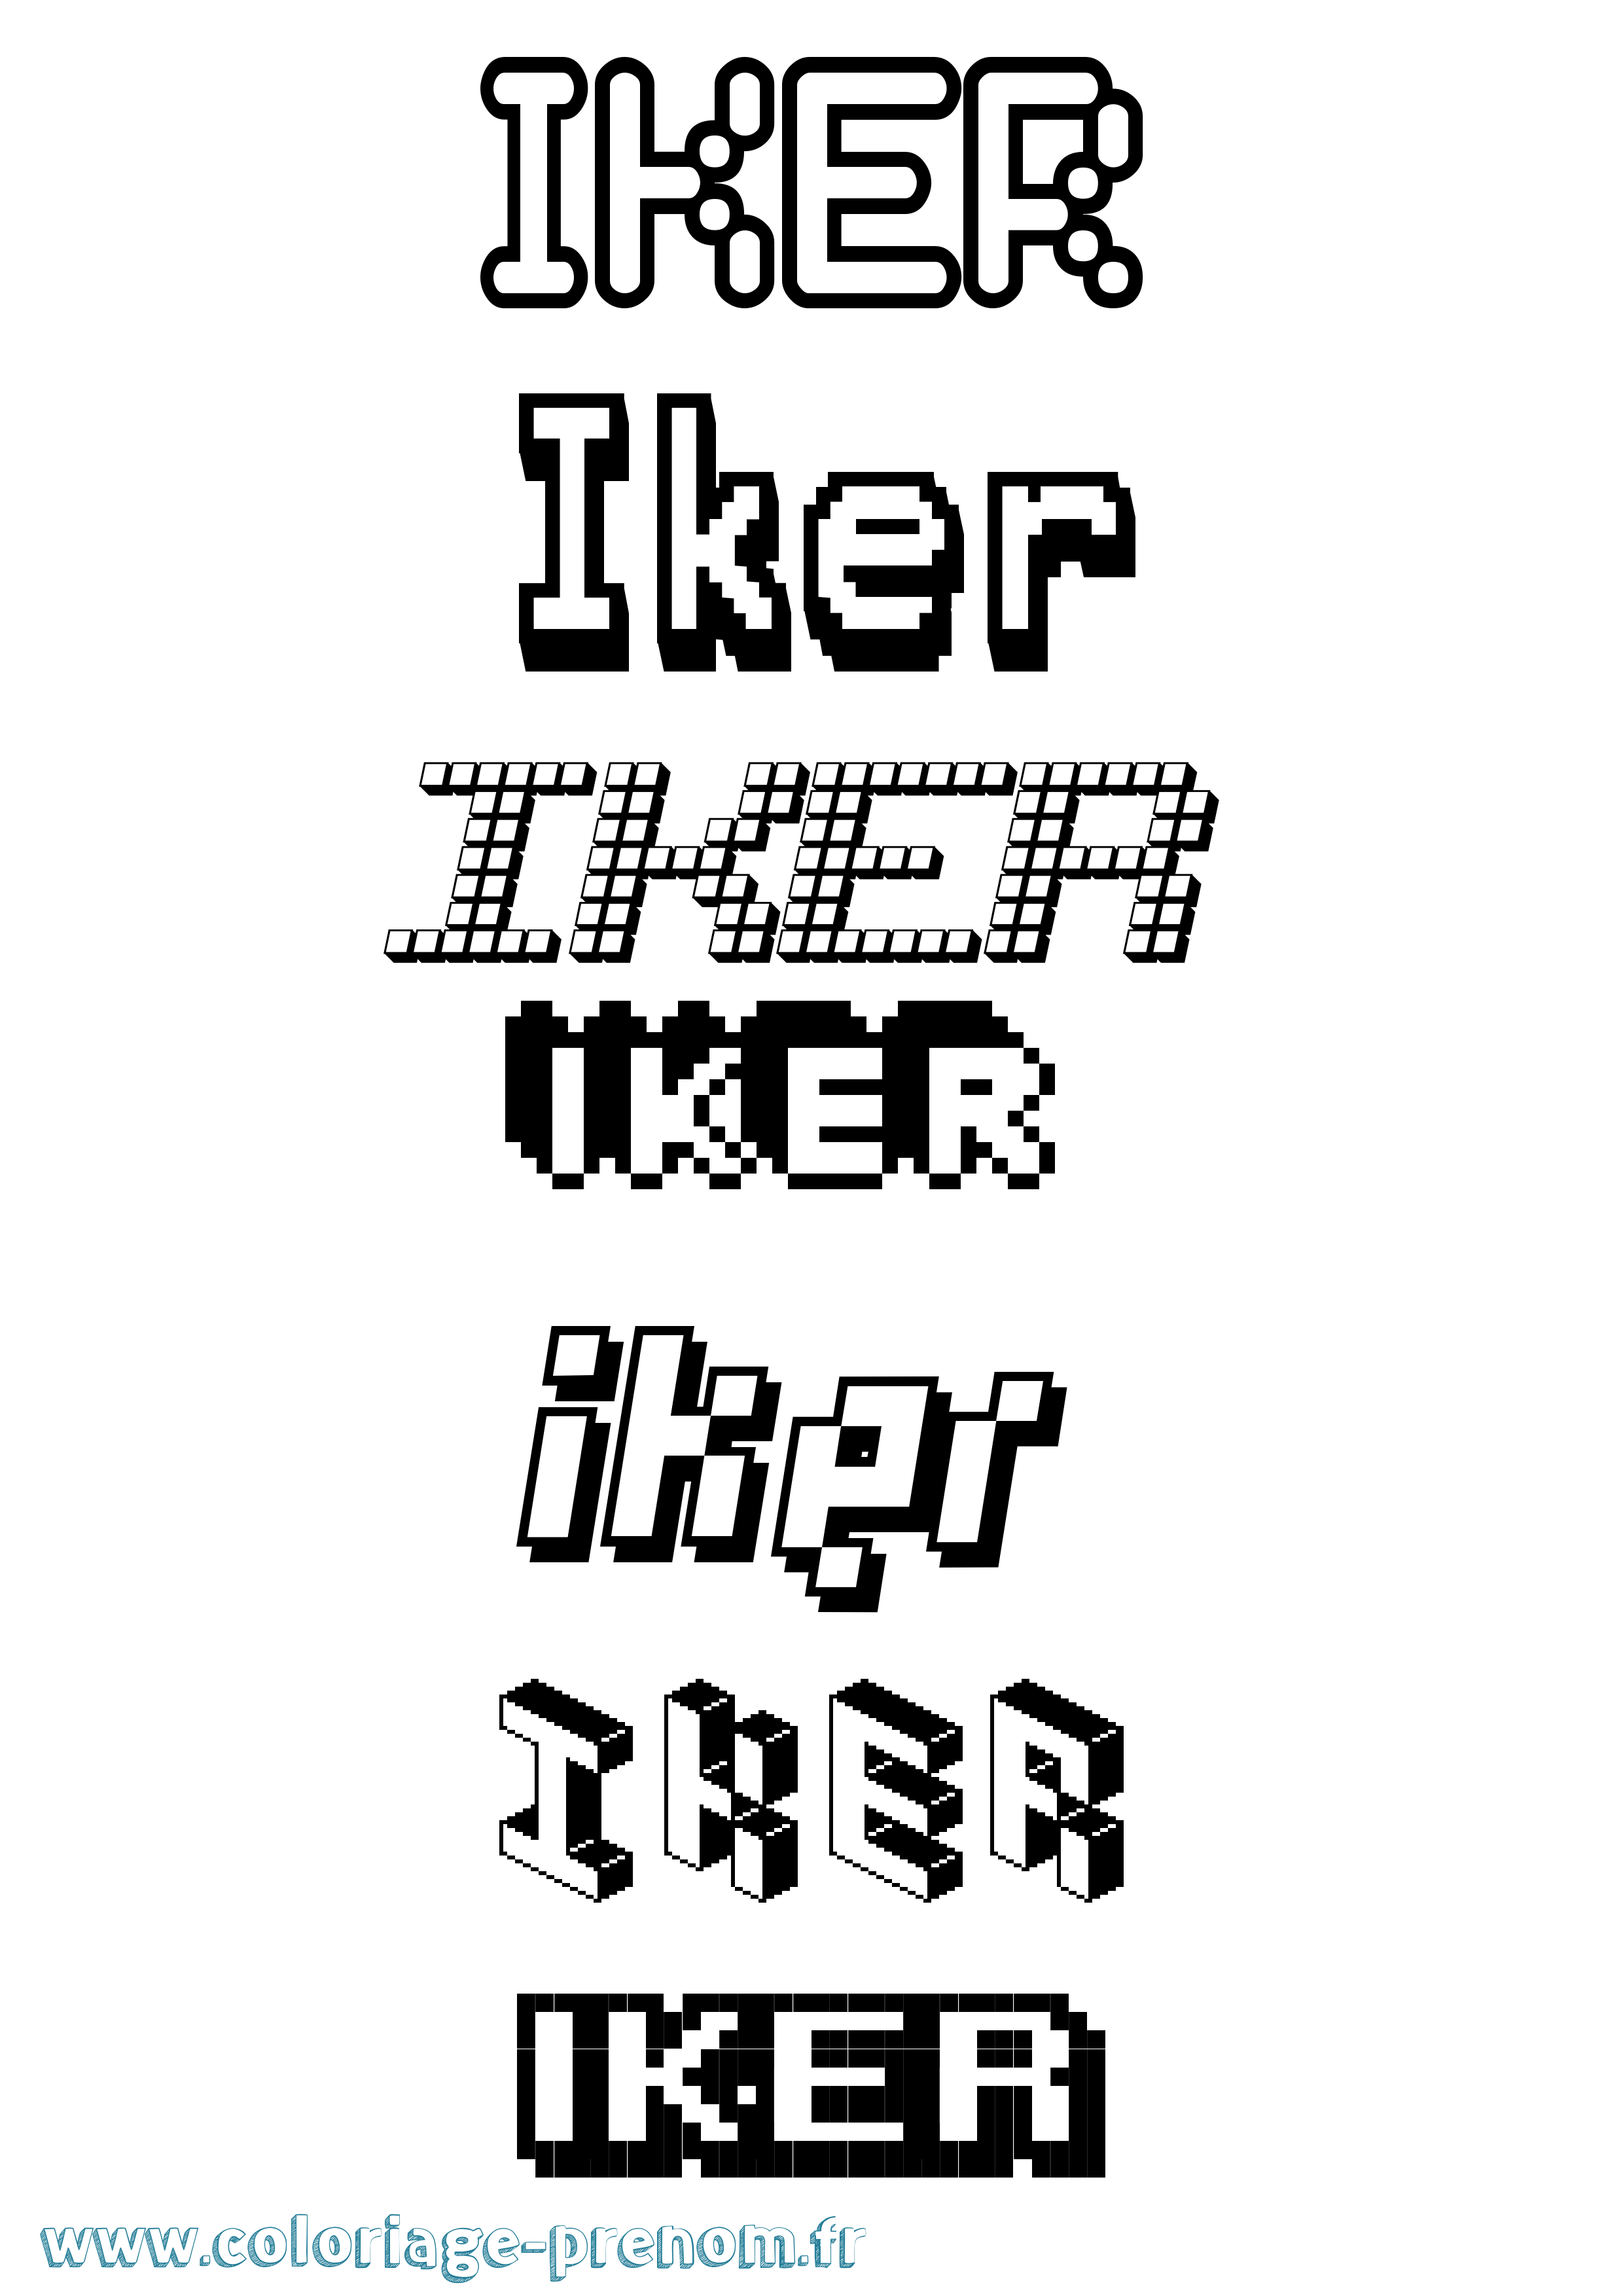 Coloriage prénom Iker Pixel